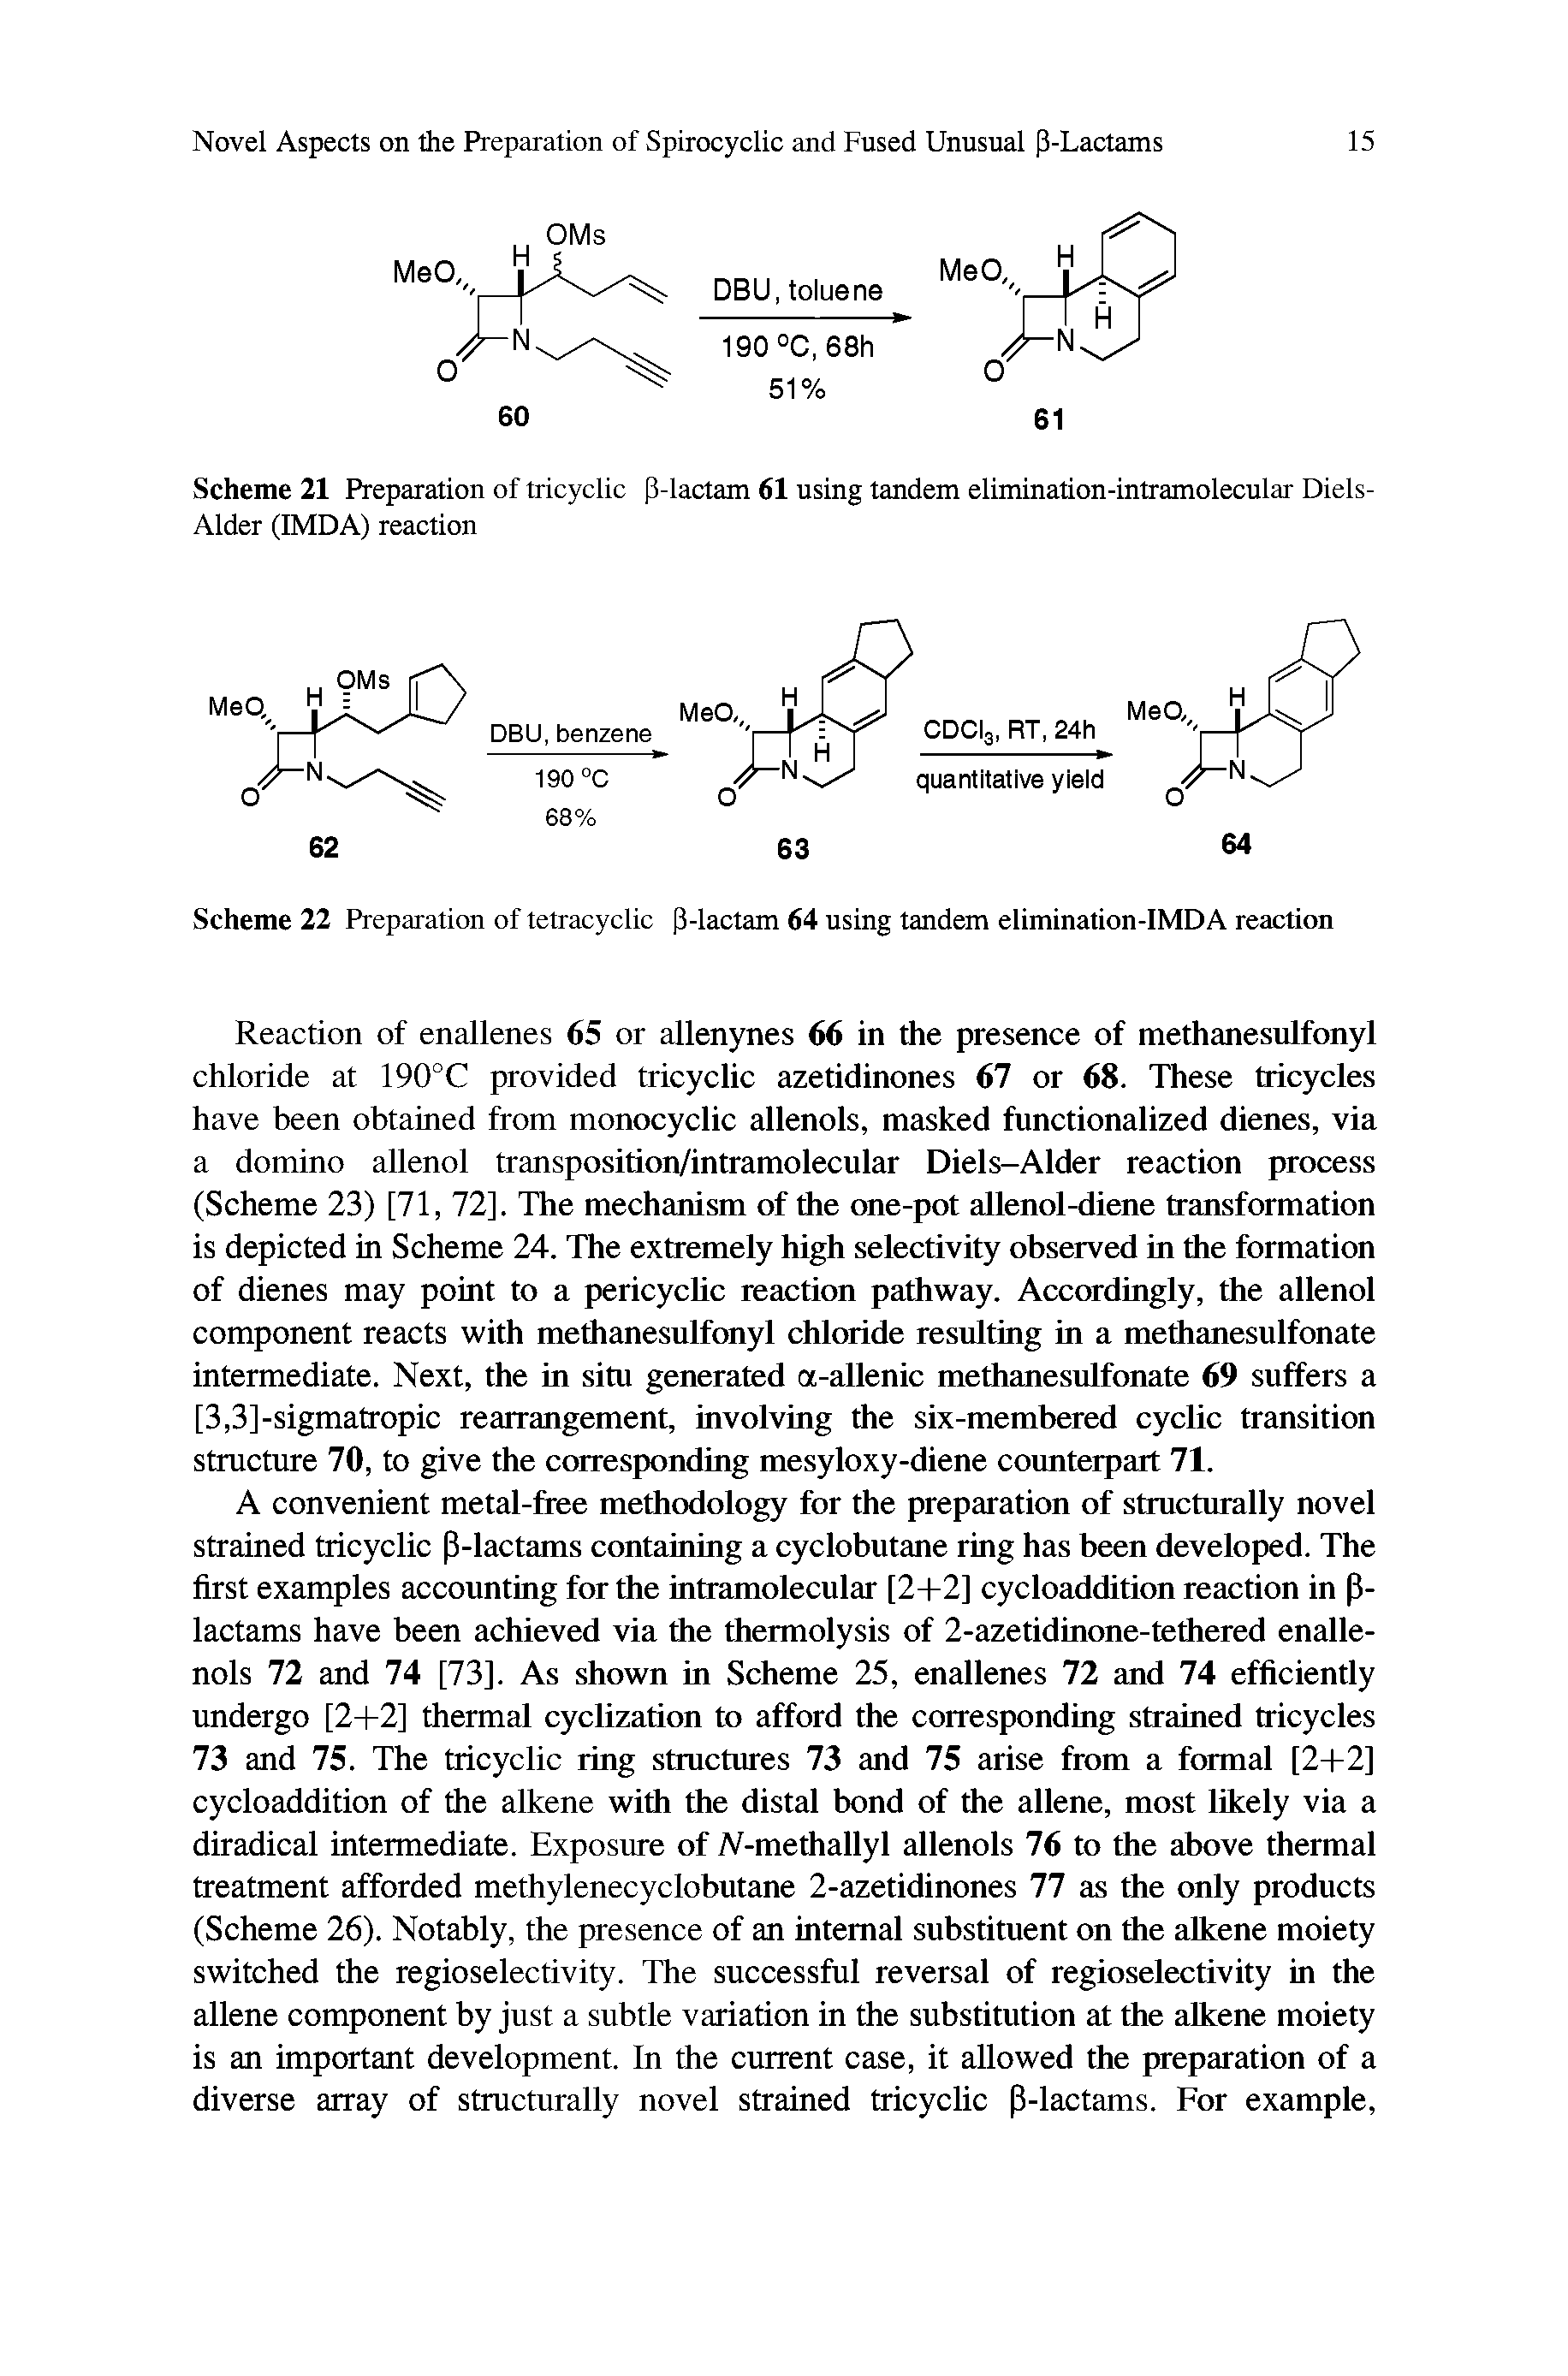 Scheme 22 Preparation of tetracyclic [3-lactam 64 using tandem elimination-IMDA reaction...